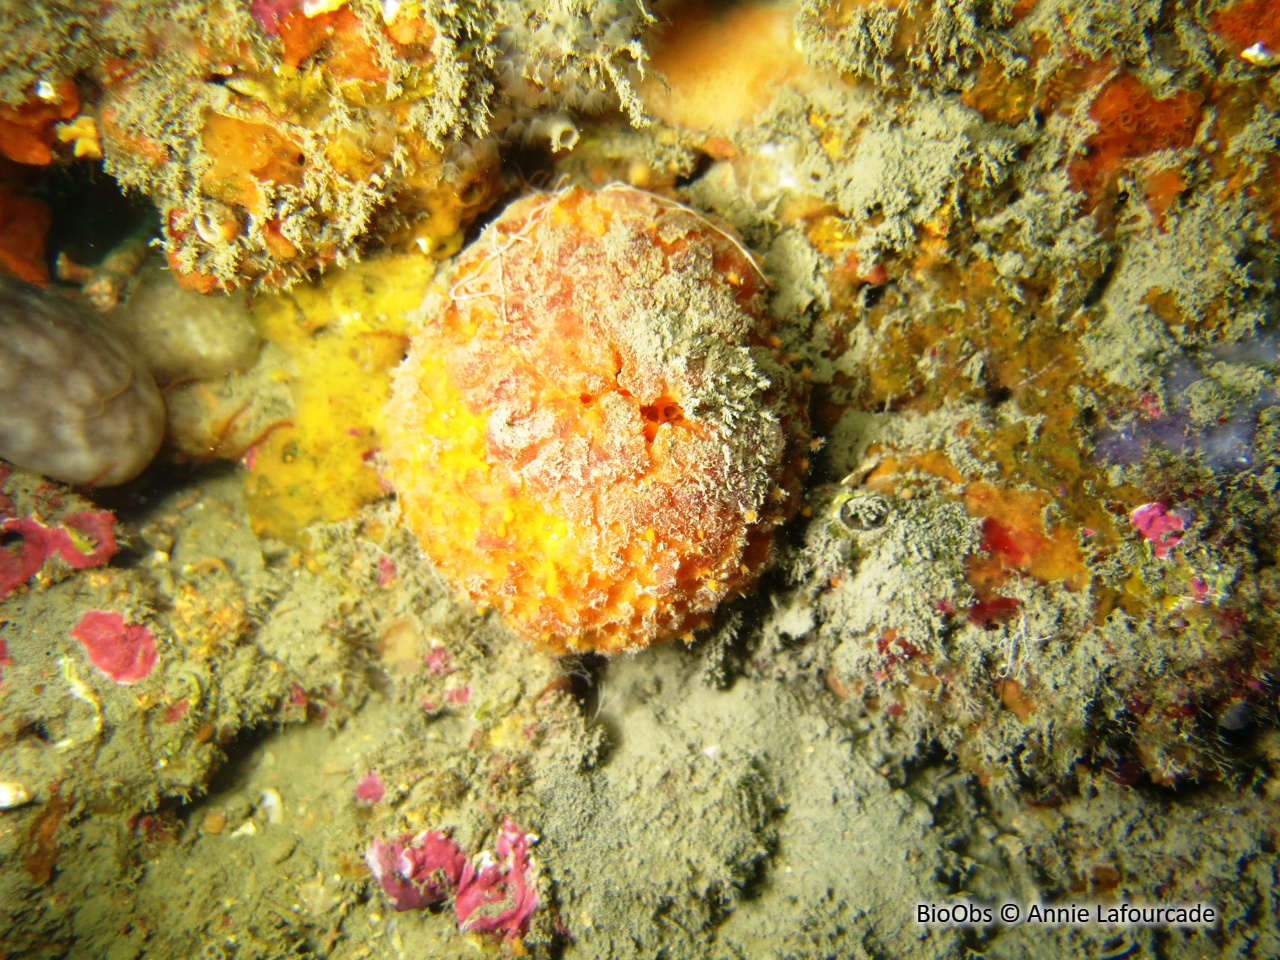 Orange de mer de Méditerranée - Tethya aurantium - Annie Lafourcade - BioObs